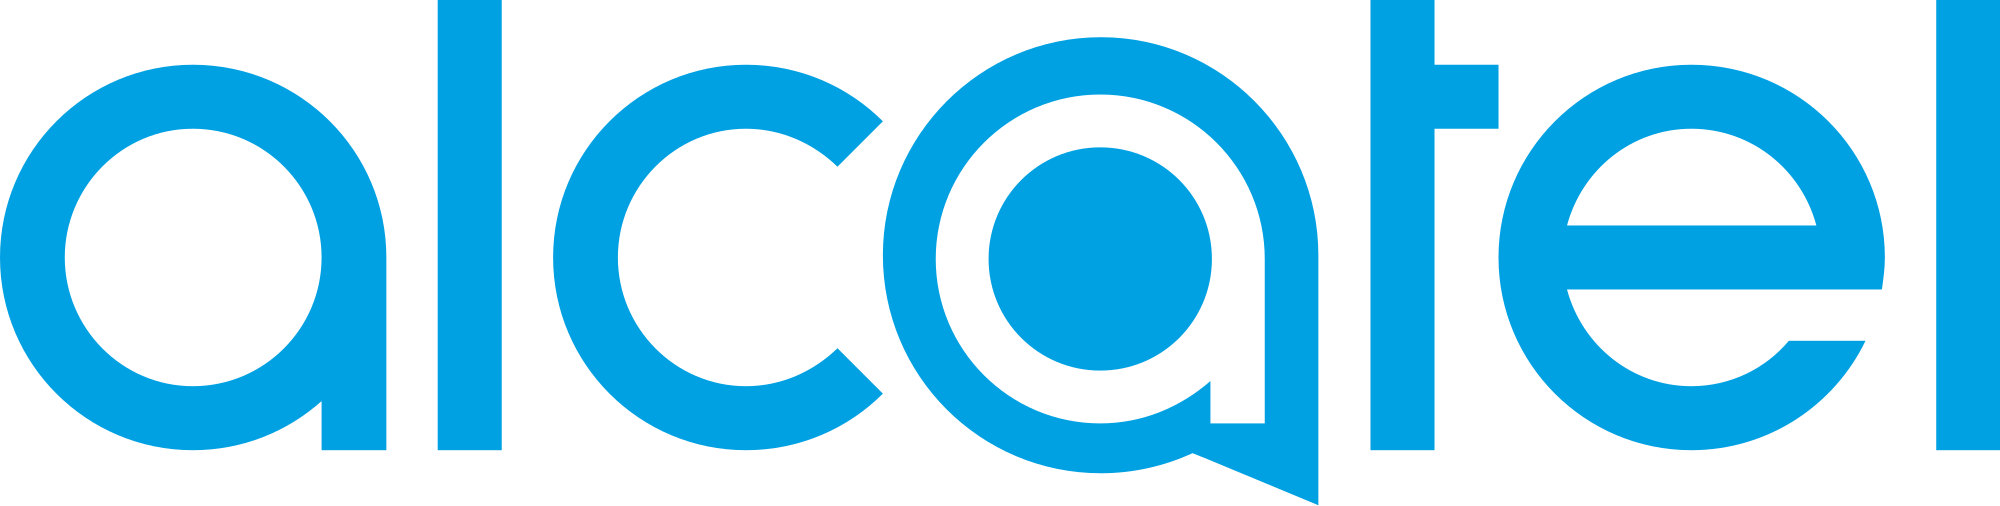 Alcatel_logo_2016.svg